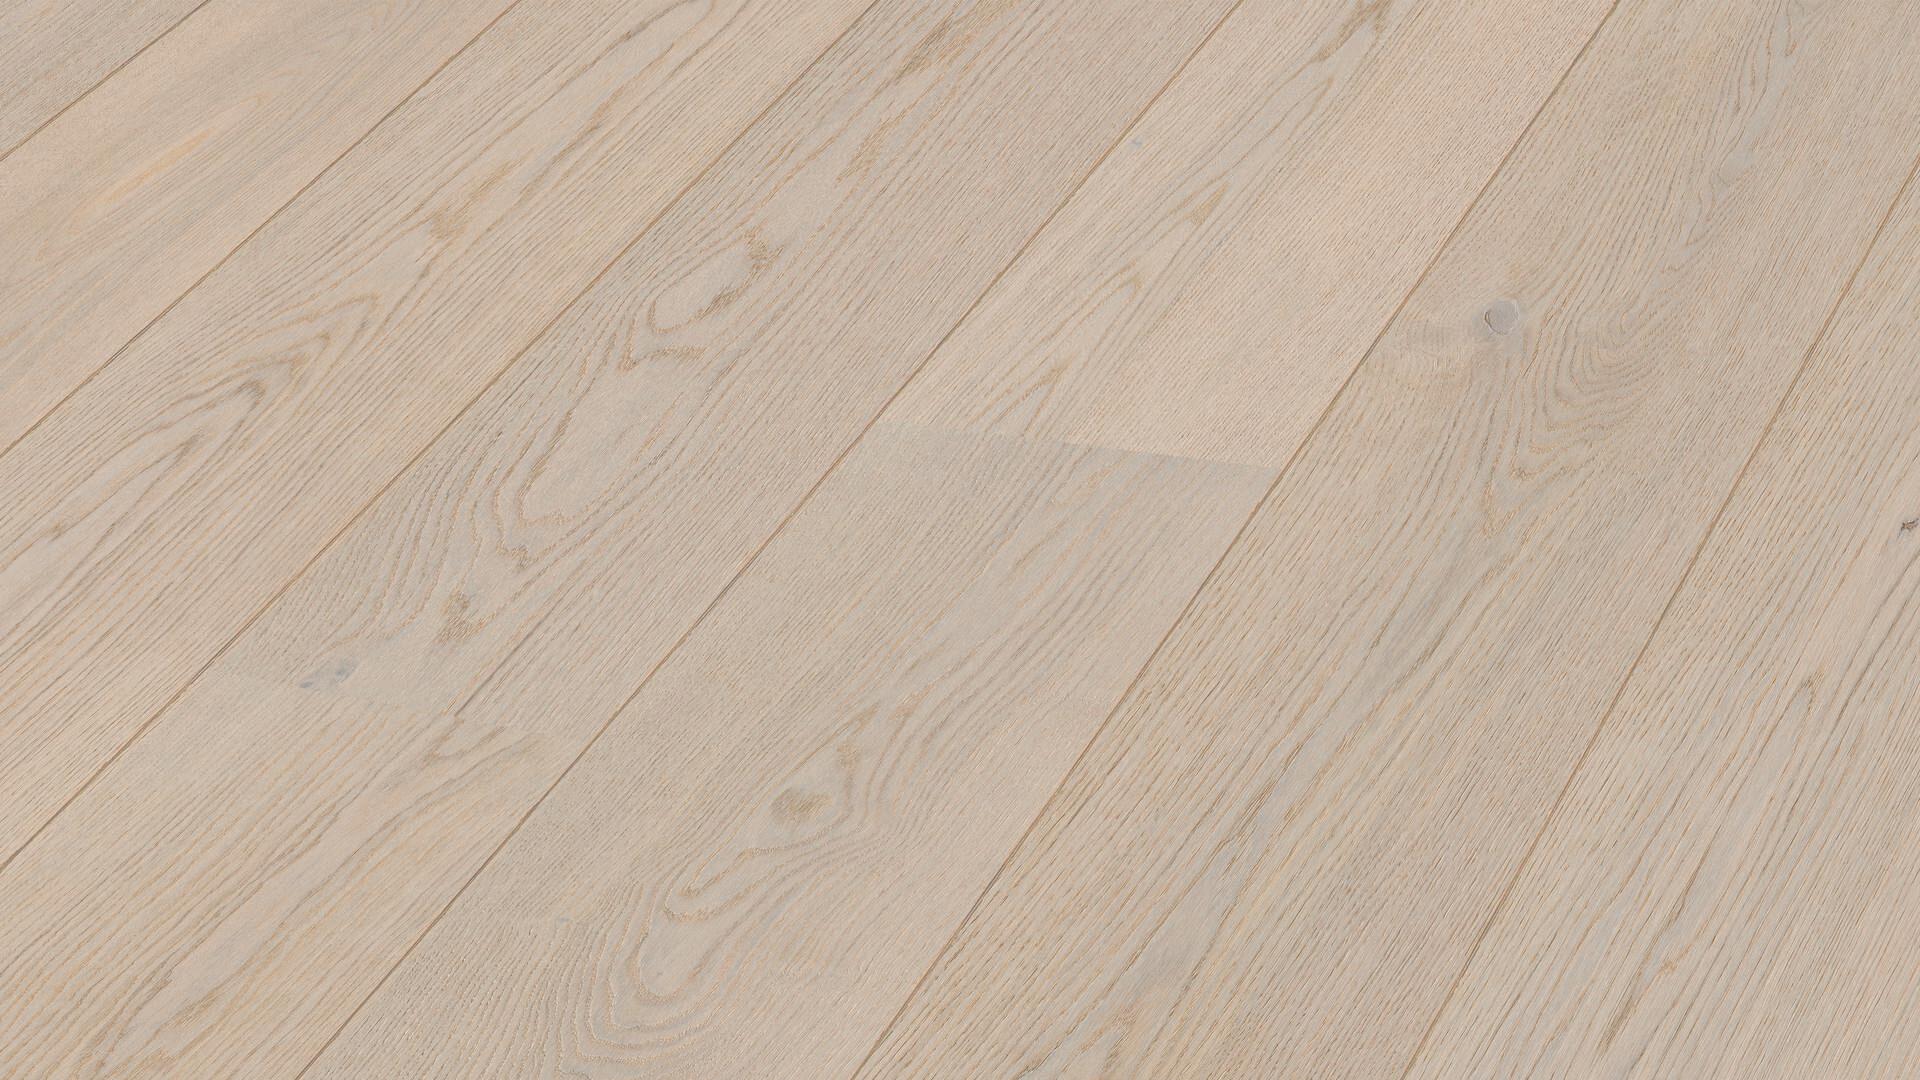 Lindura wood flooring HD 400 Natural arctic white oak 8917